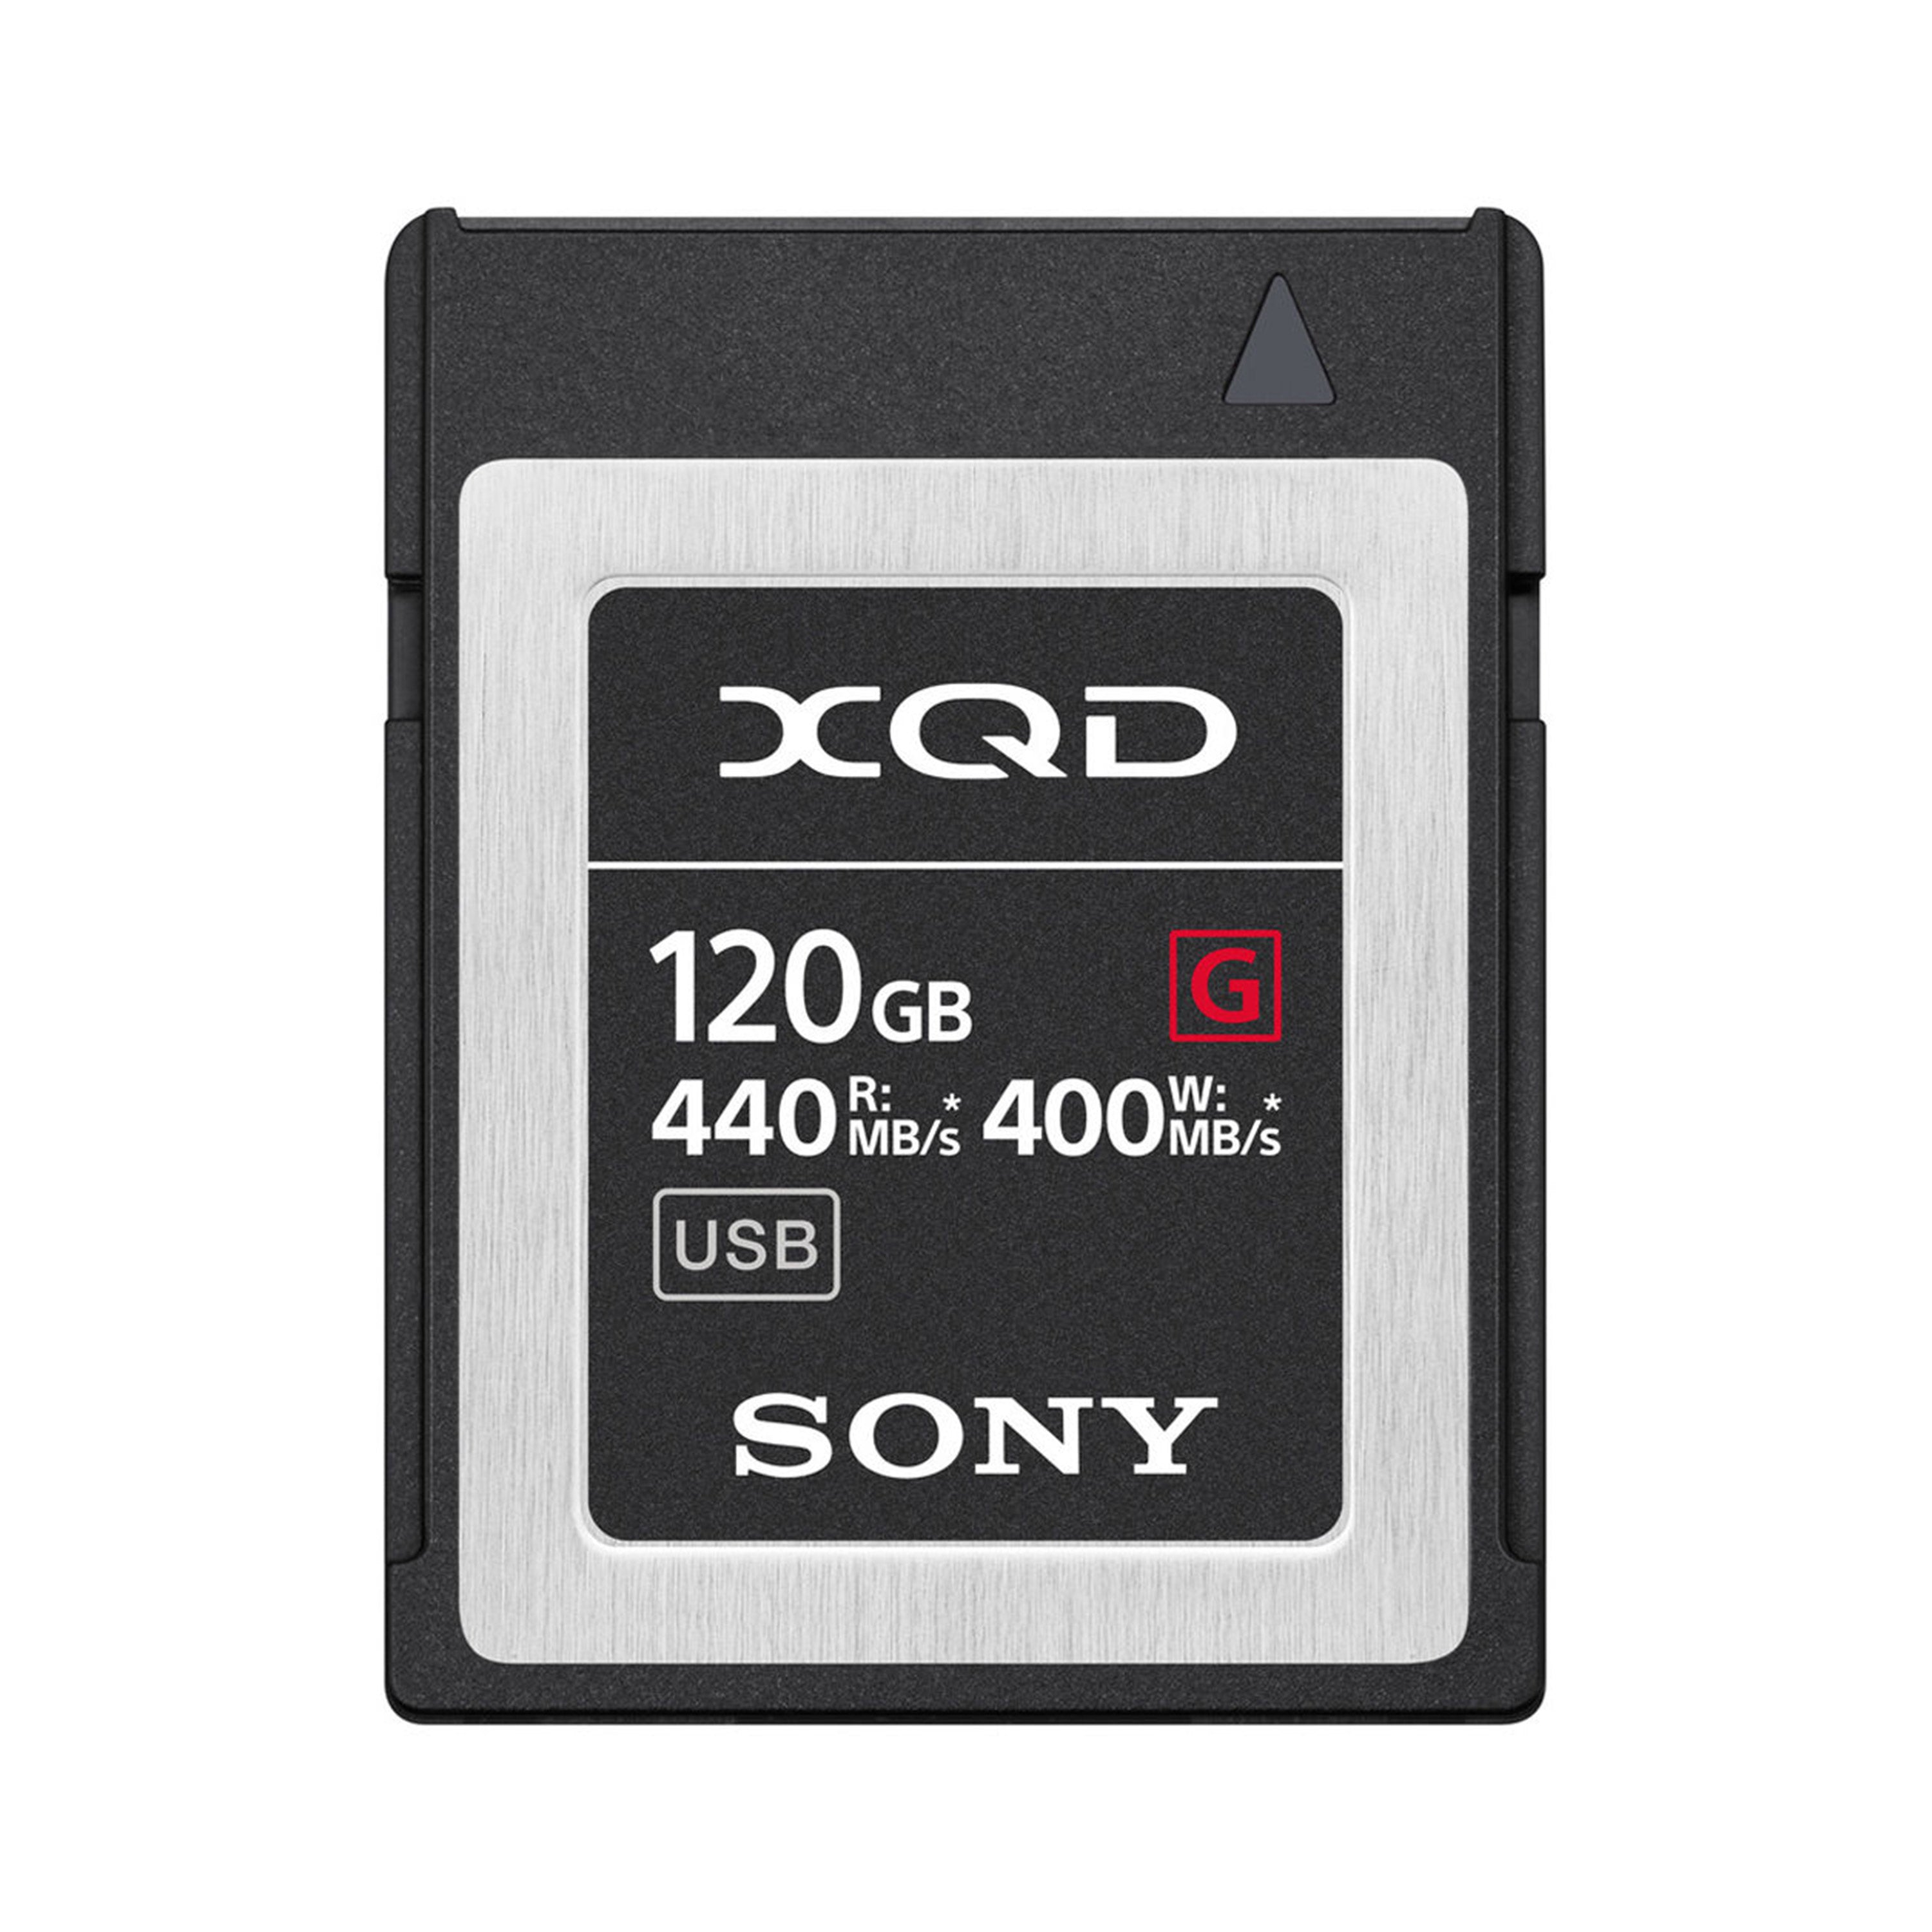 XQD G Series Memory Card